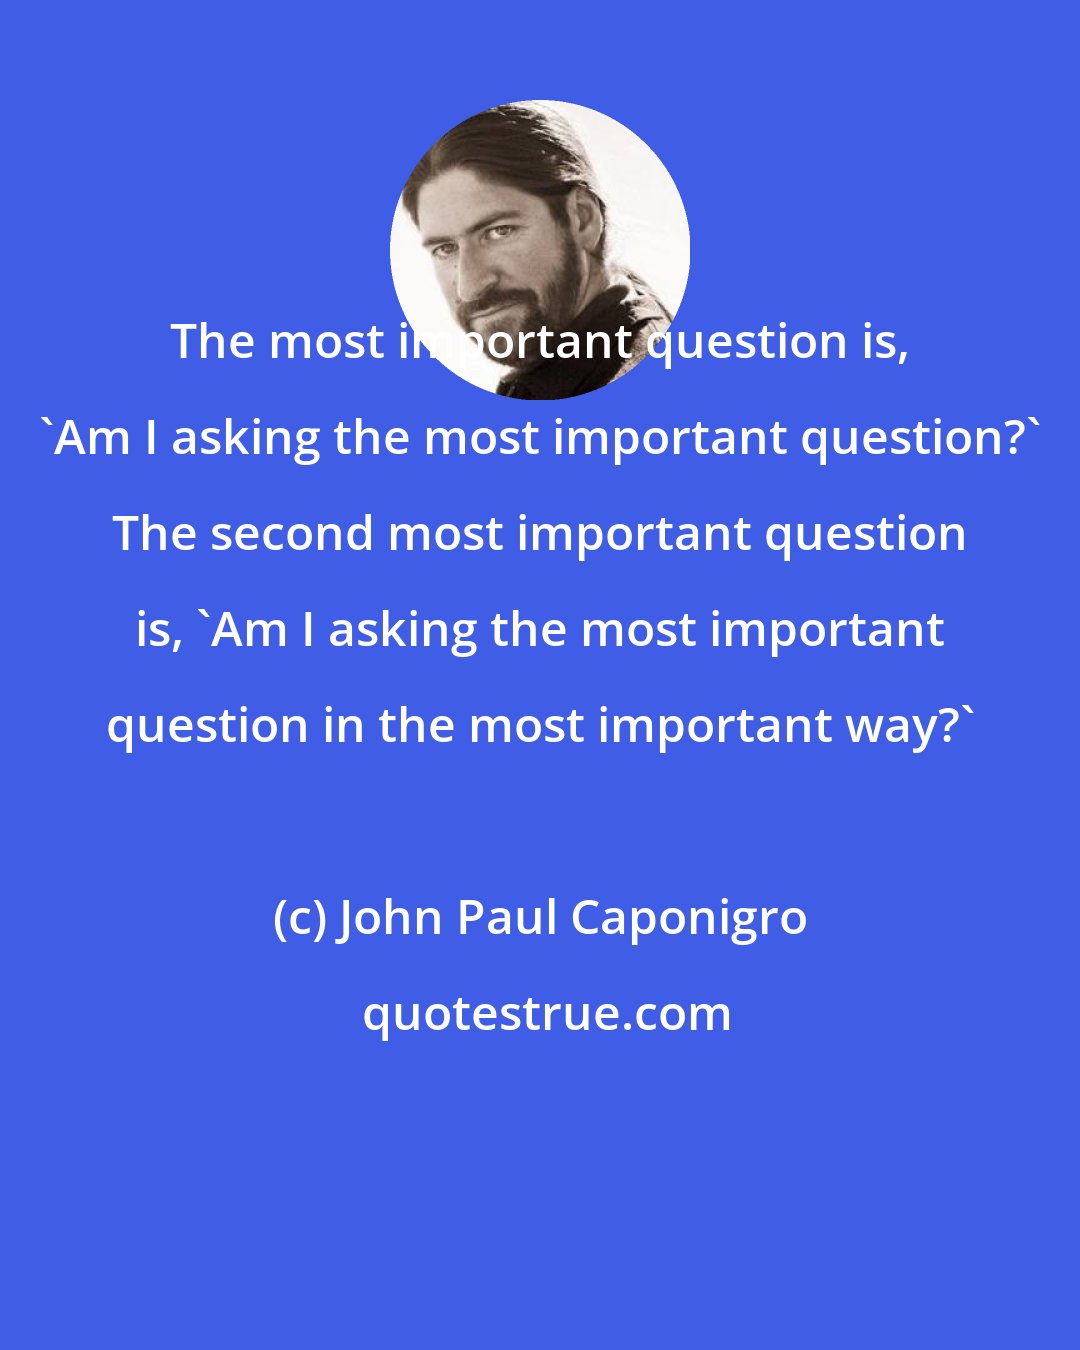 John Paul Caponigro: The most important question is, 'Am I asking the most important question?' The second most important question is, 'Am I asking the most important question in the most important way?'